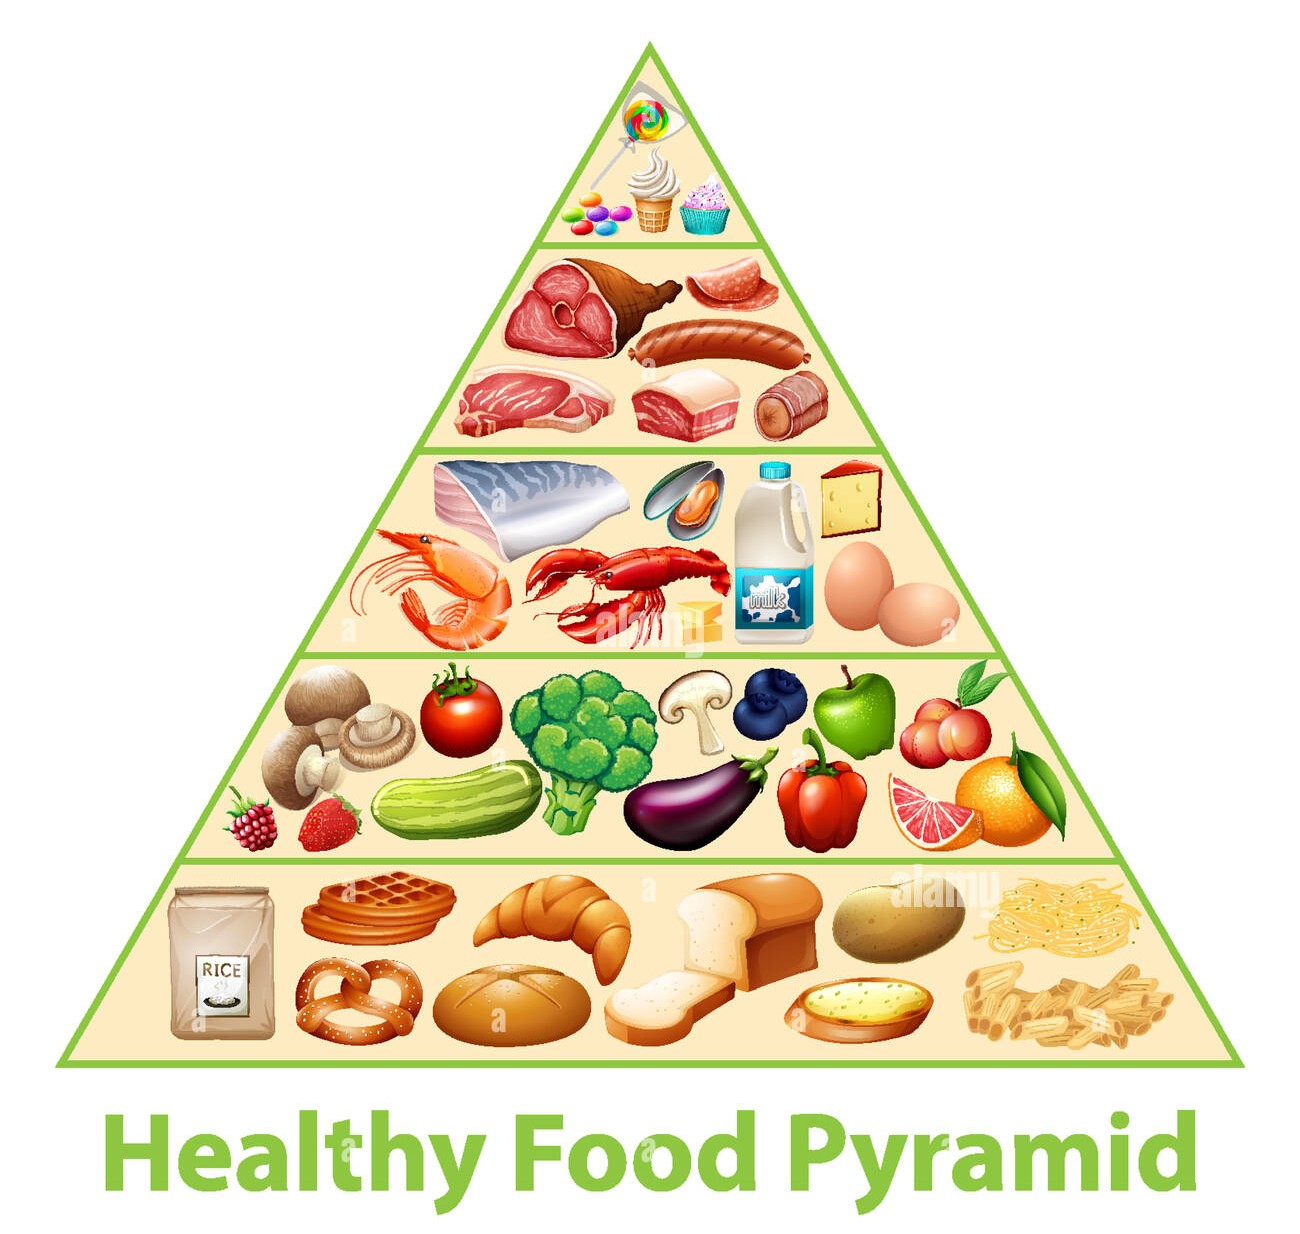 017130012341580-healthy-food-pyramid-chart-2gwadmk.jpg